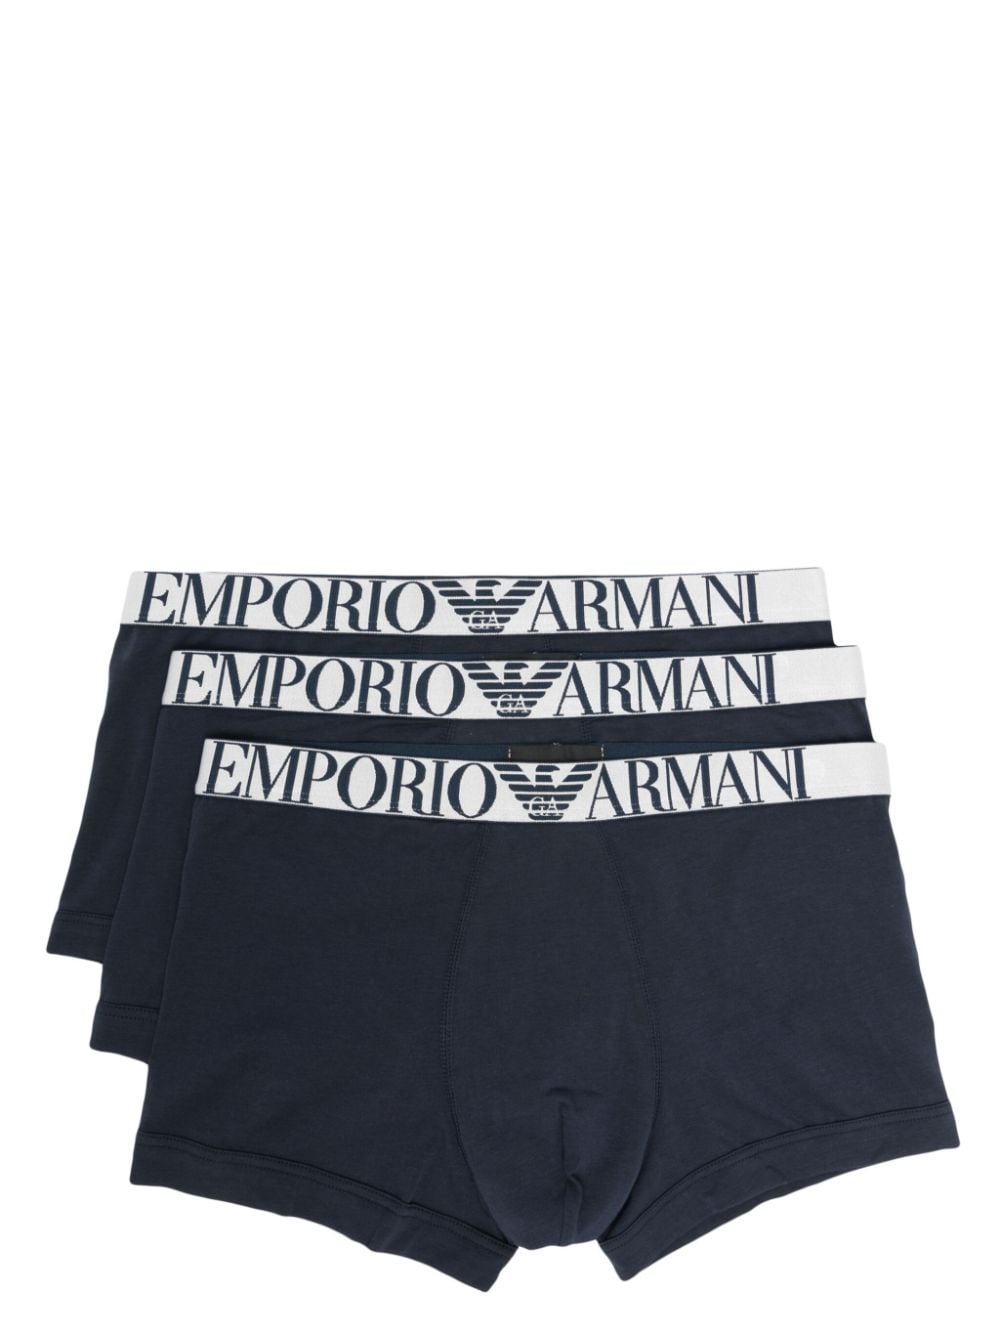 Emporio Armani logo-waistband cotton briefs (pack of three) - Blue